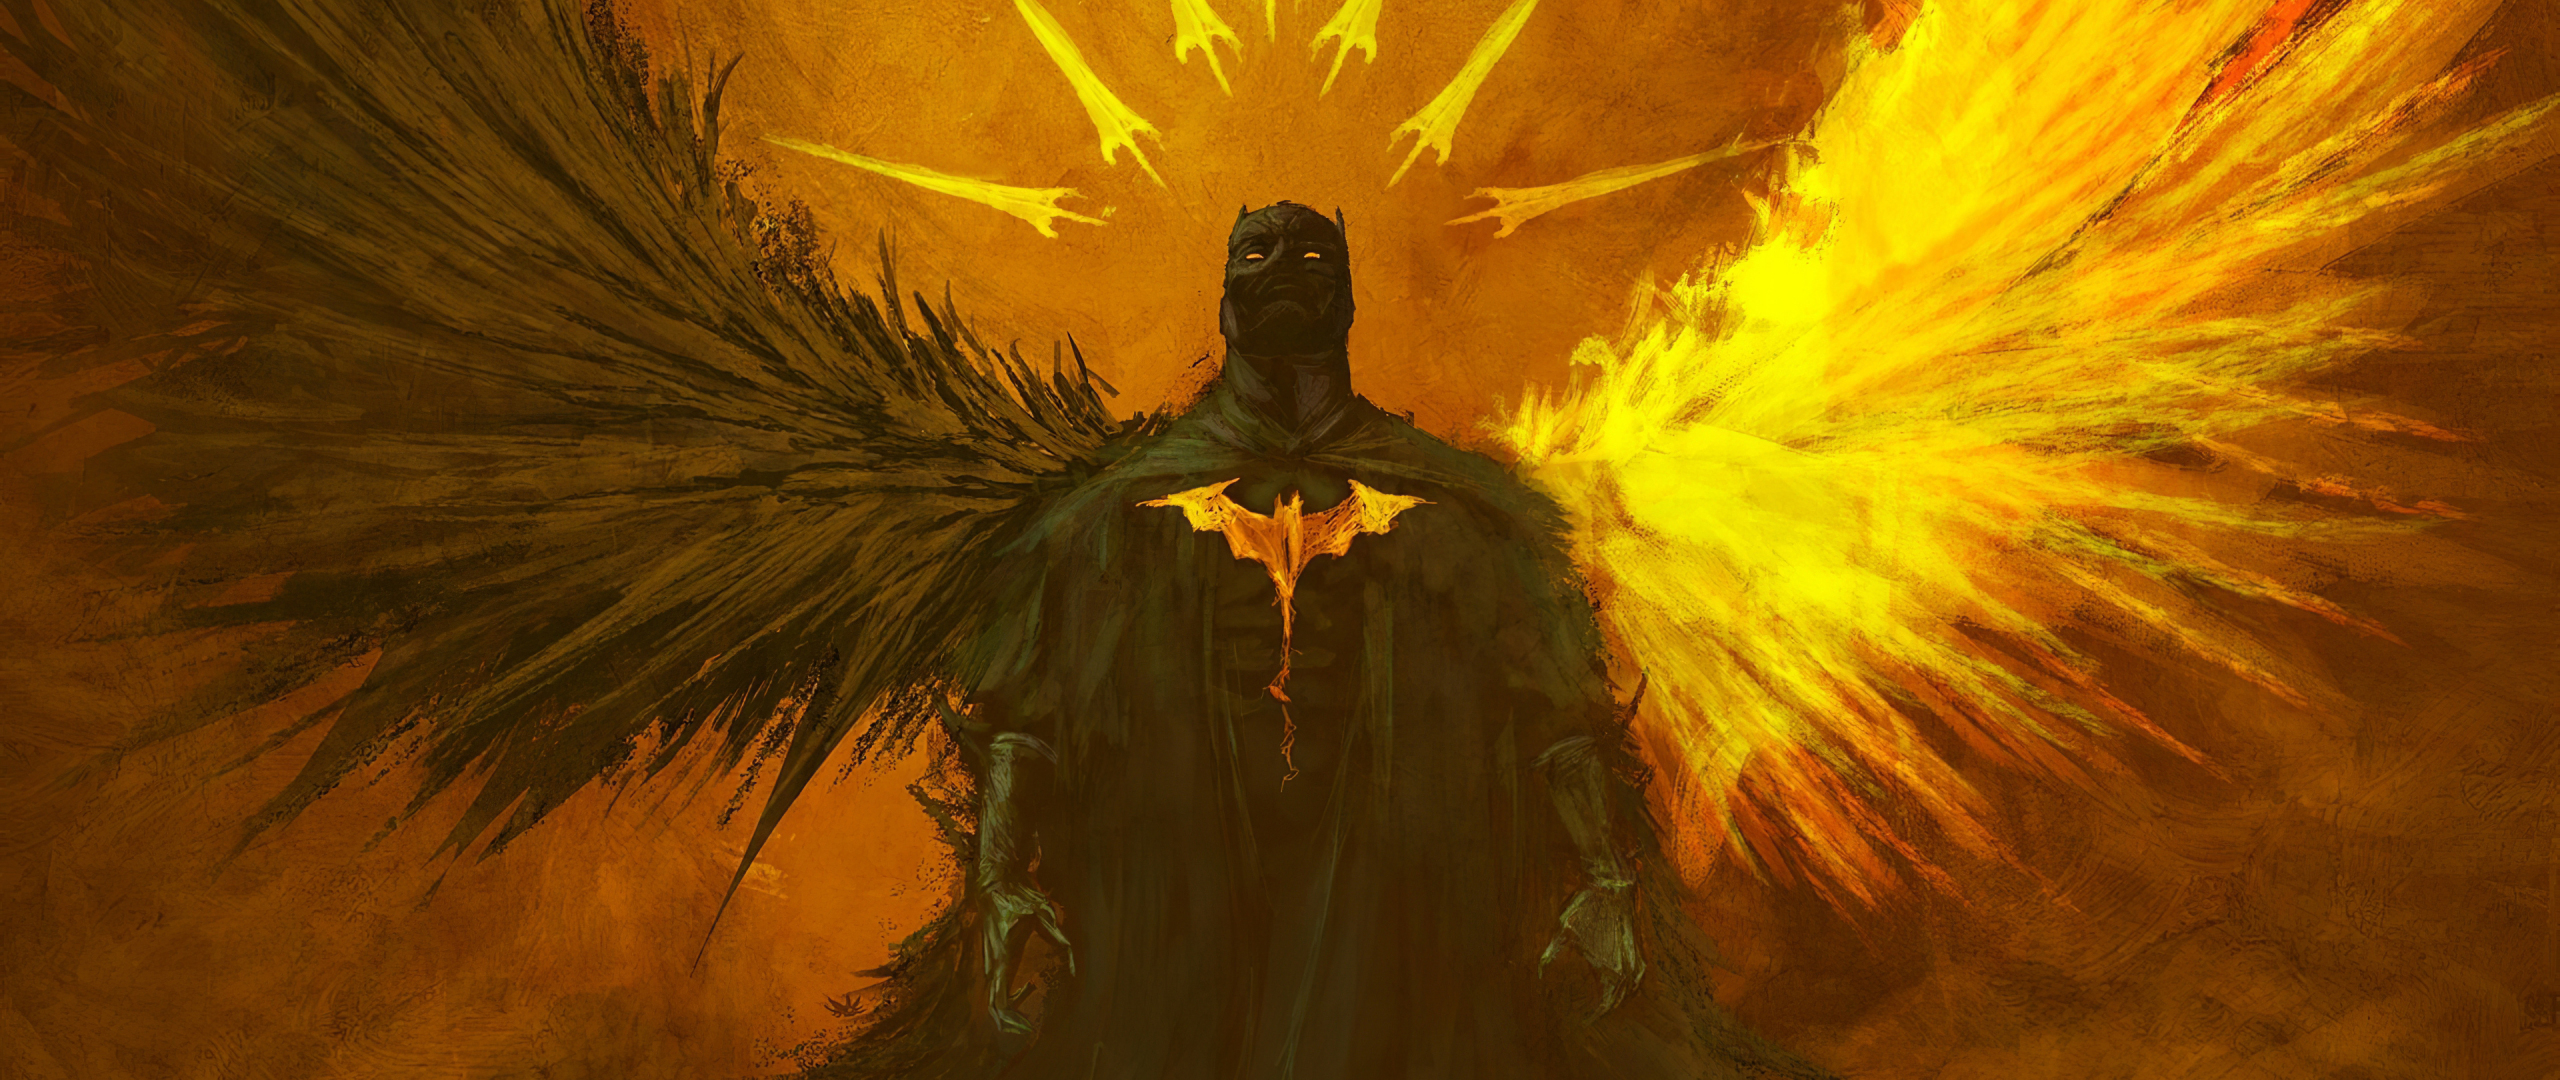 Batman, angel, wings of darkness and good, art, 2560x1080 wallpaper